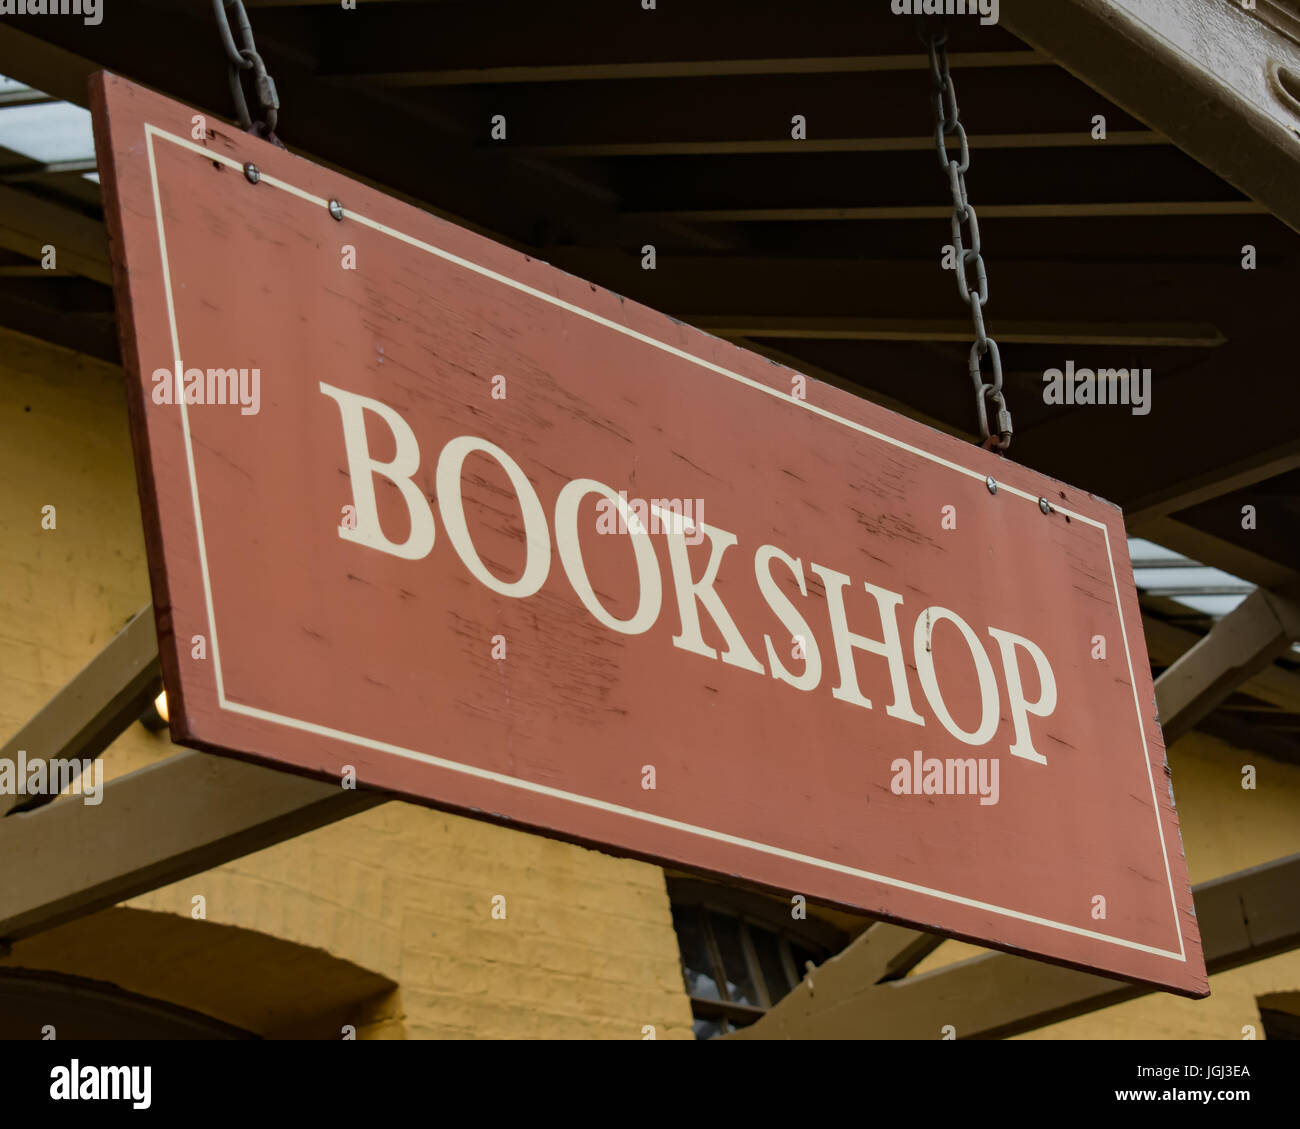 book shop sign Stock Photo